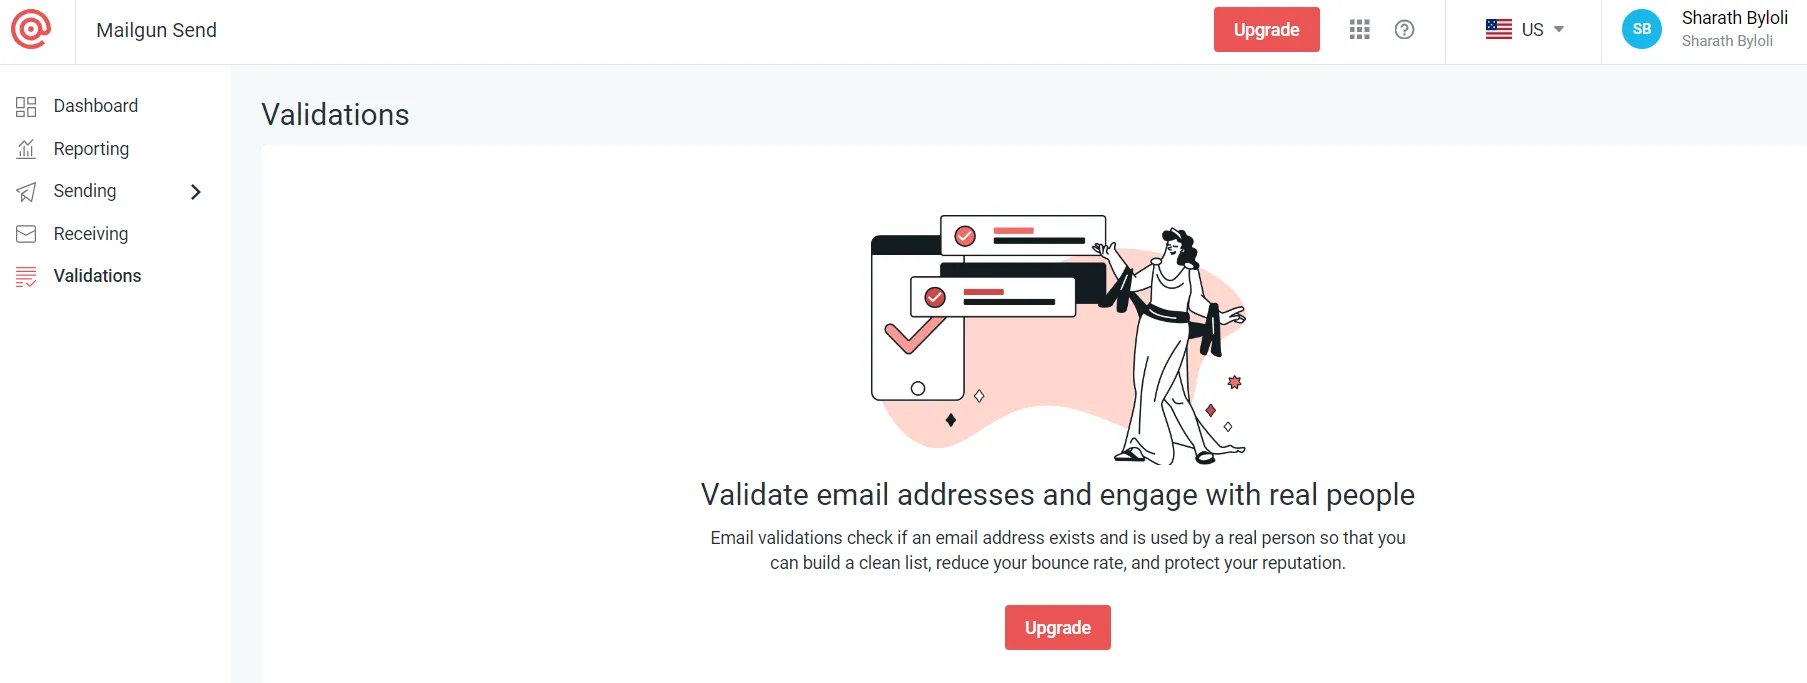 bulk email service, Mailgun's email validation API